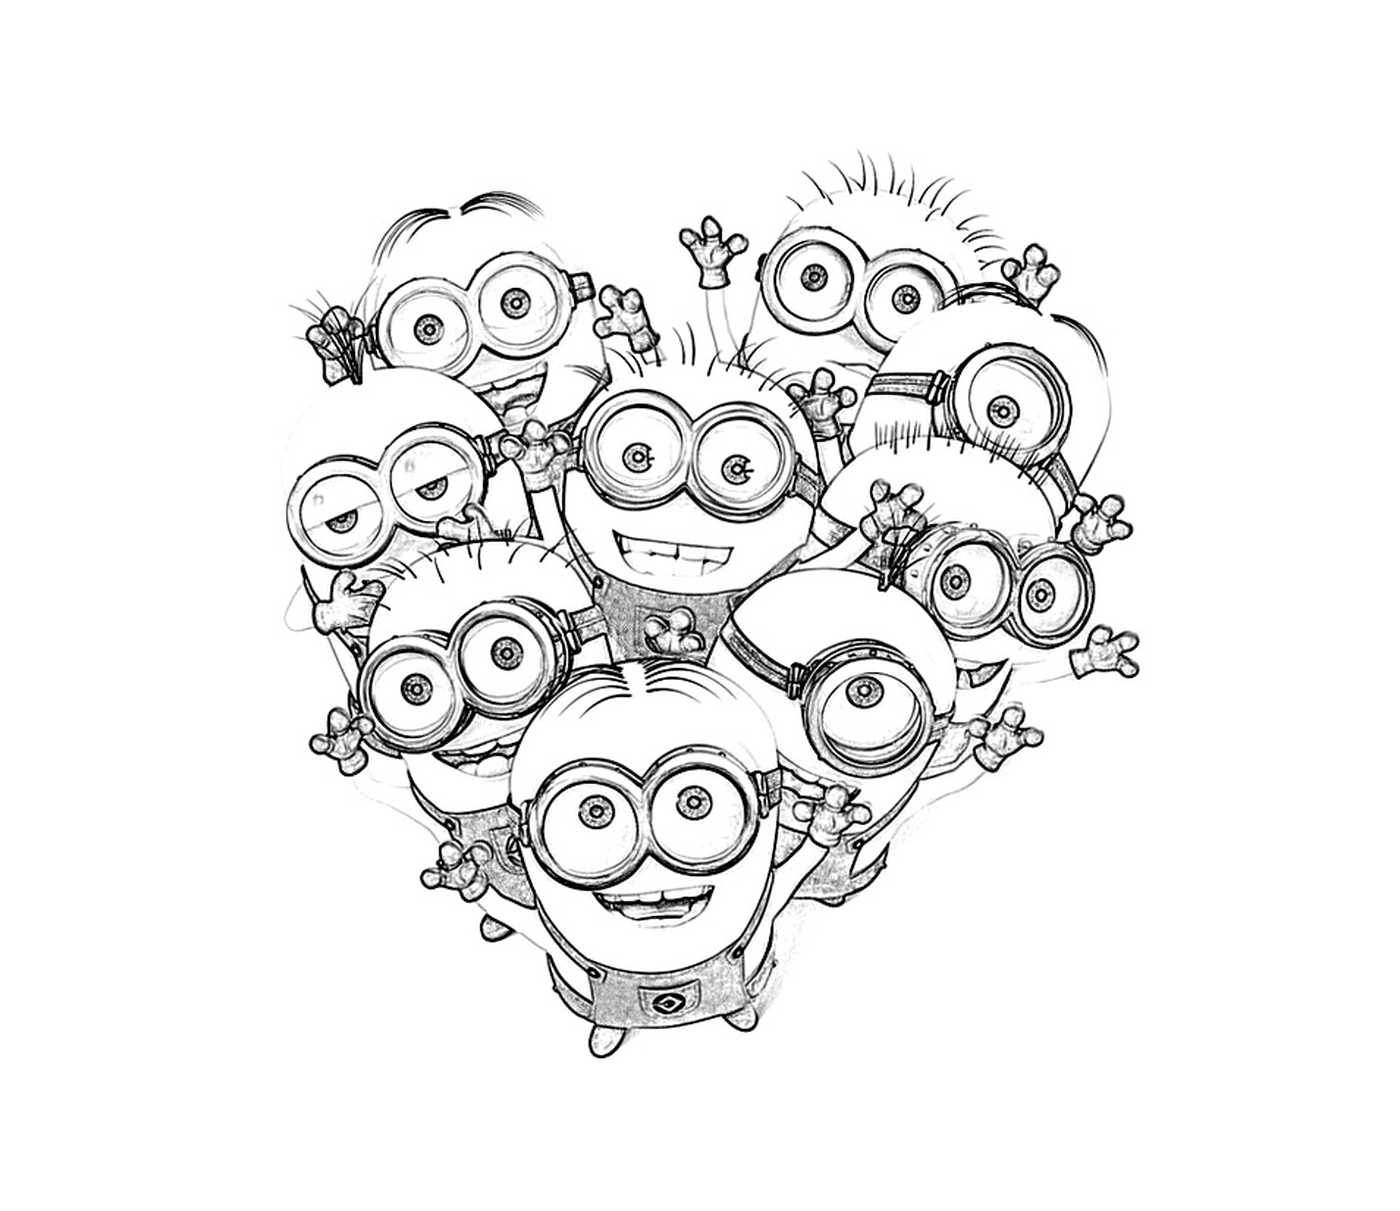  Heart-shaped minions, friendly group 